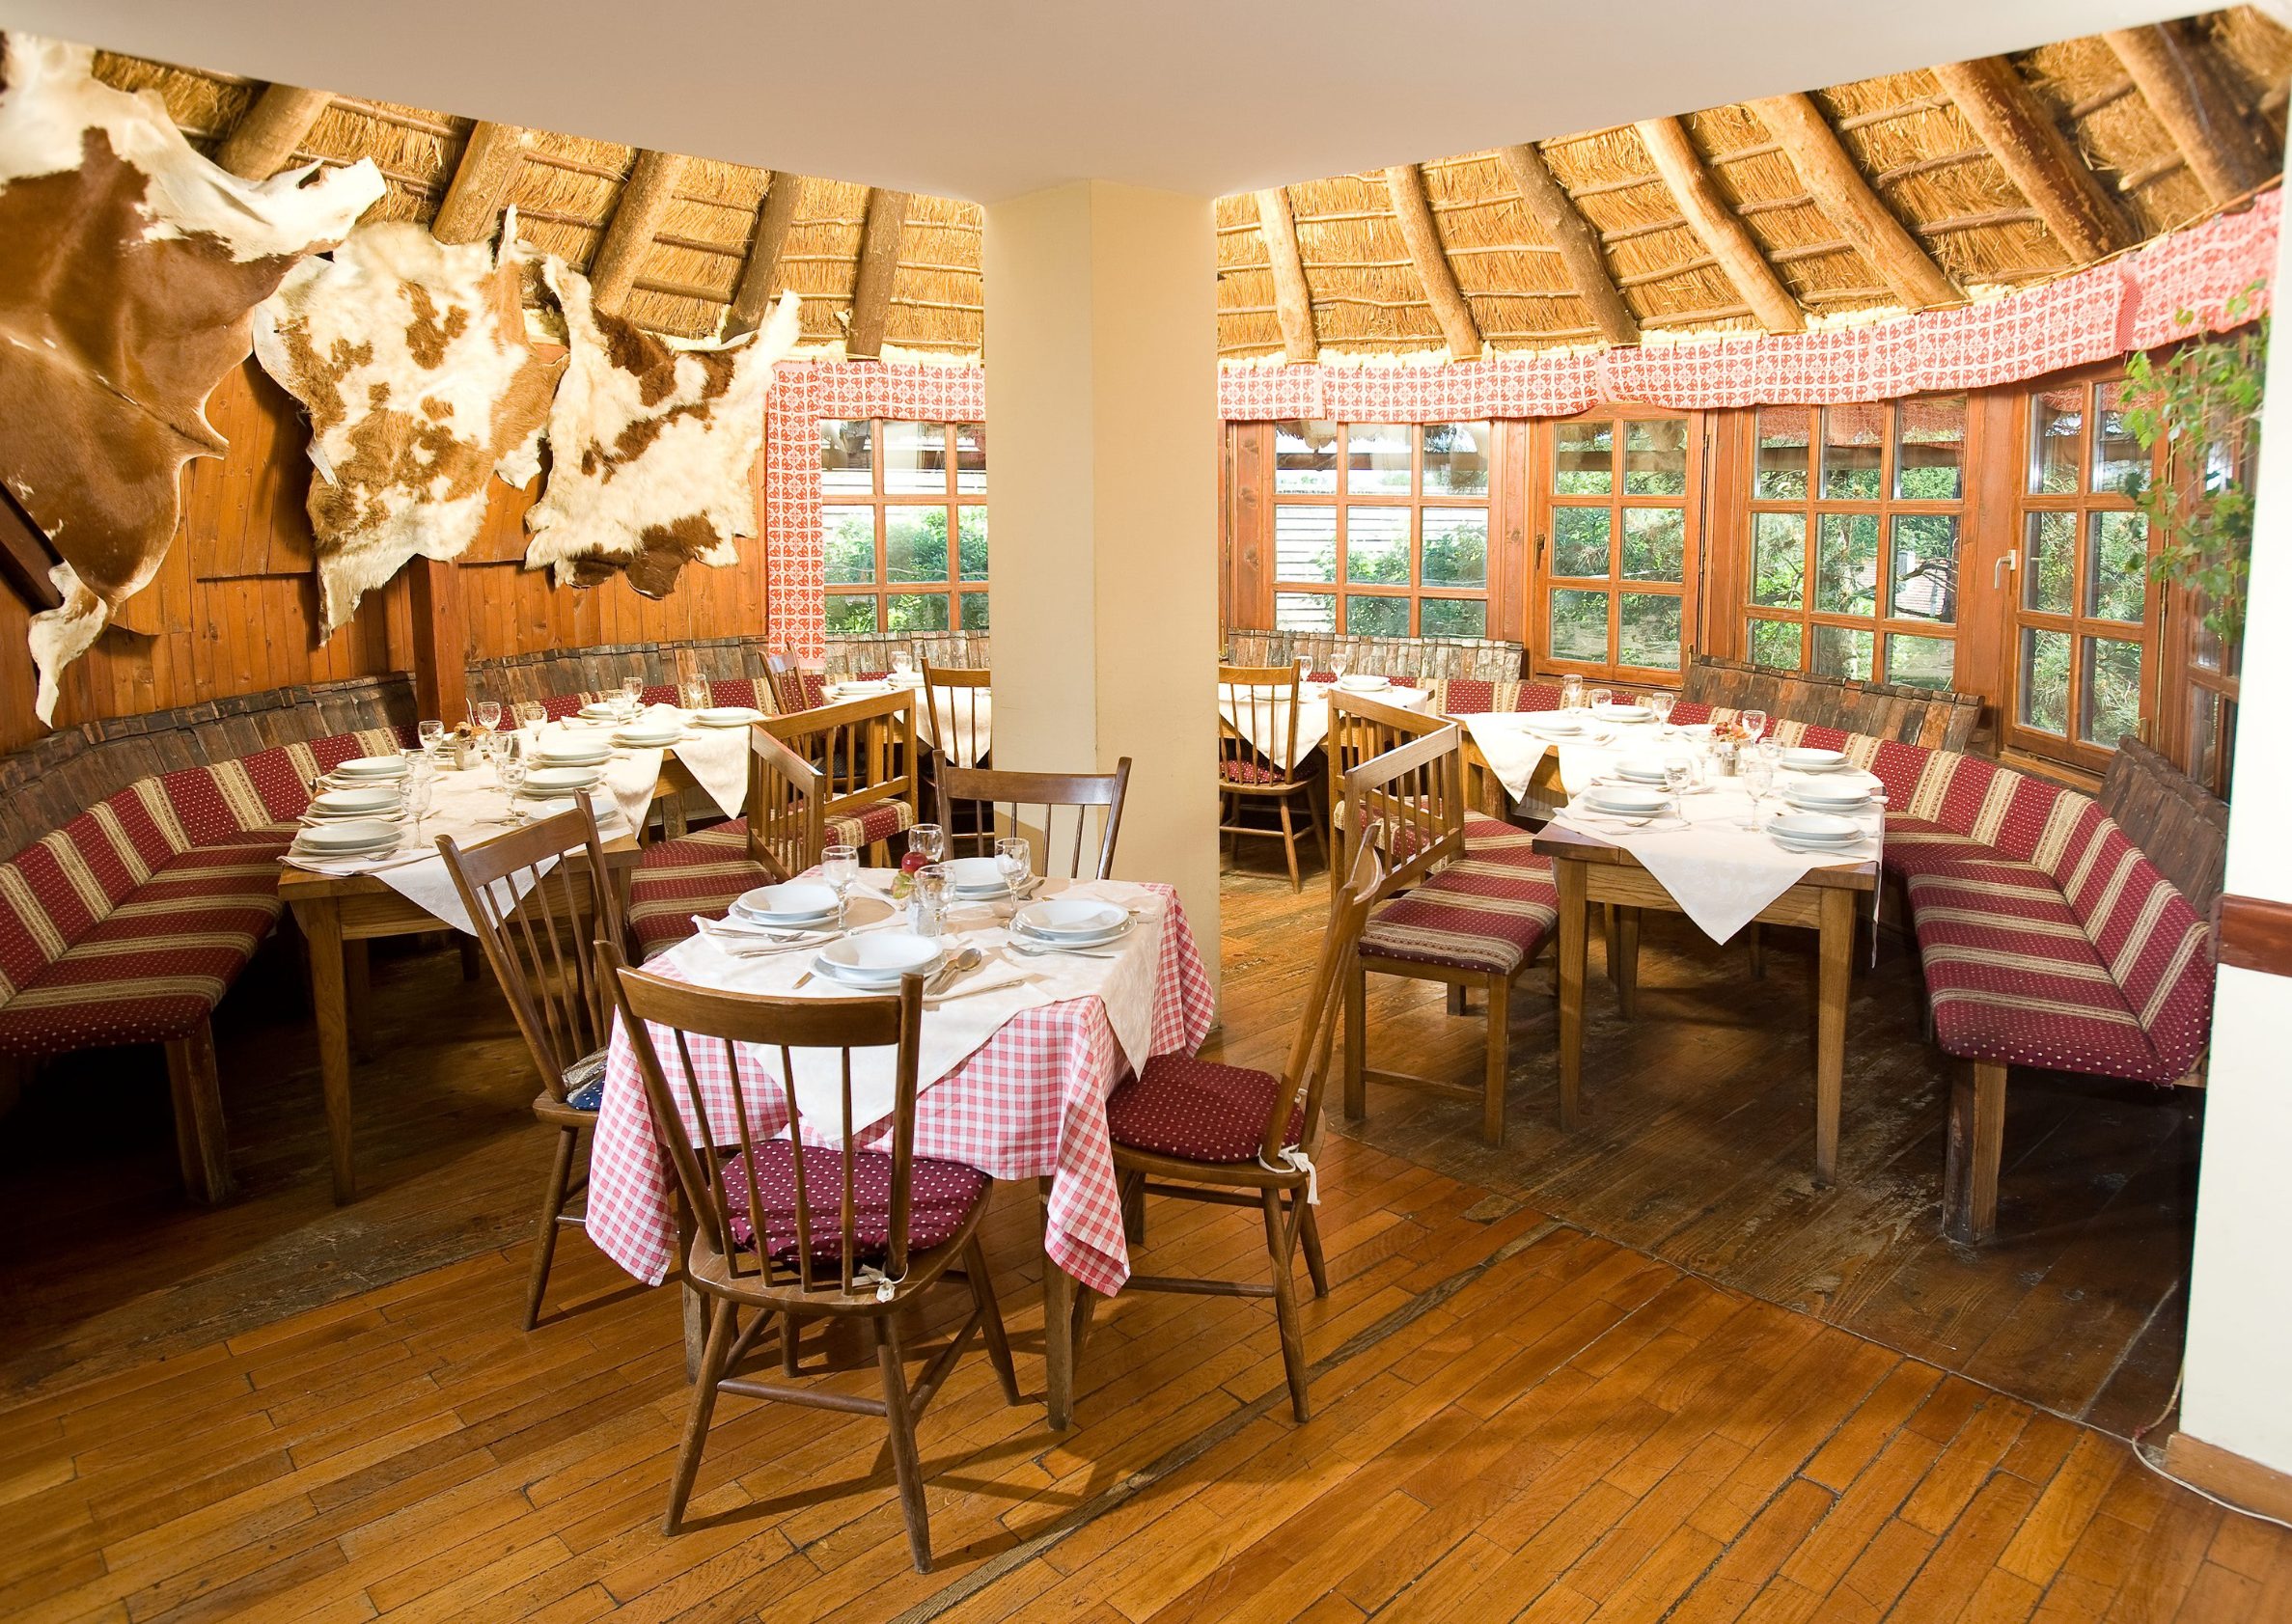 Desinic, 150513.
Restoran Gresna gorica, jedan od najboljih objekata seoskog turizma.
Na slici: interijer.
Foto: Darko Tomas / CROPIX
